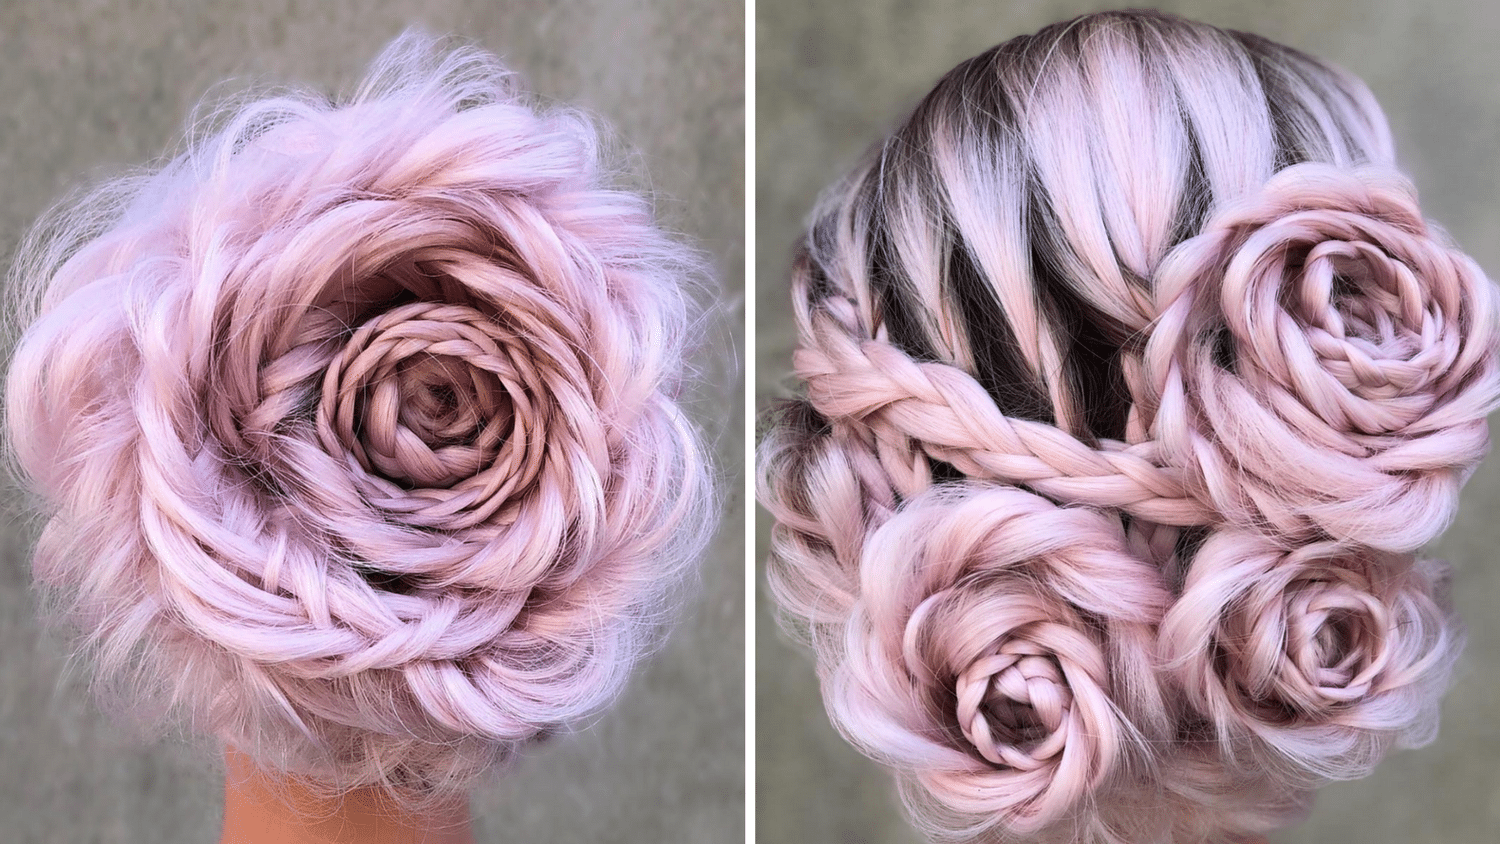 Rose Braid Hairstyles Are An Instagram Hit - Simplemost